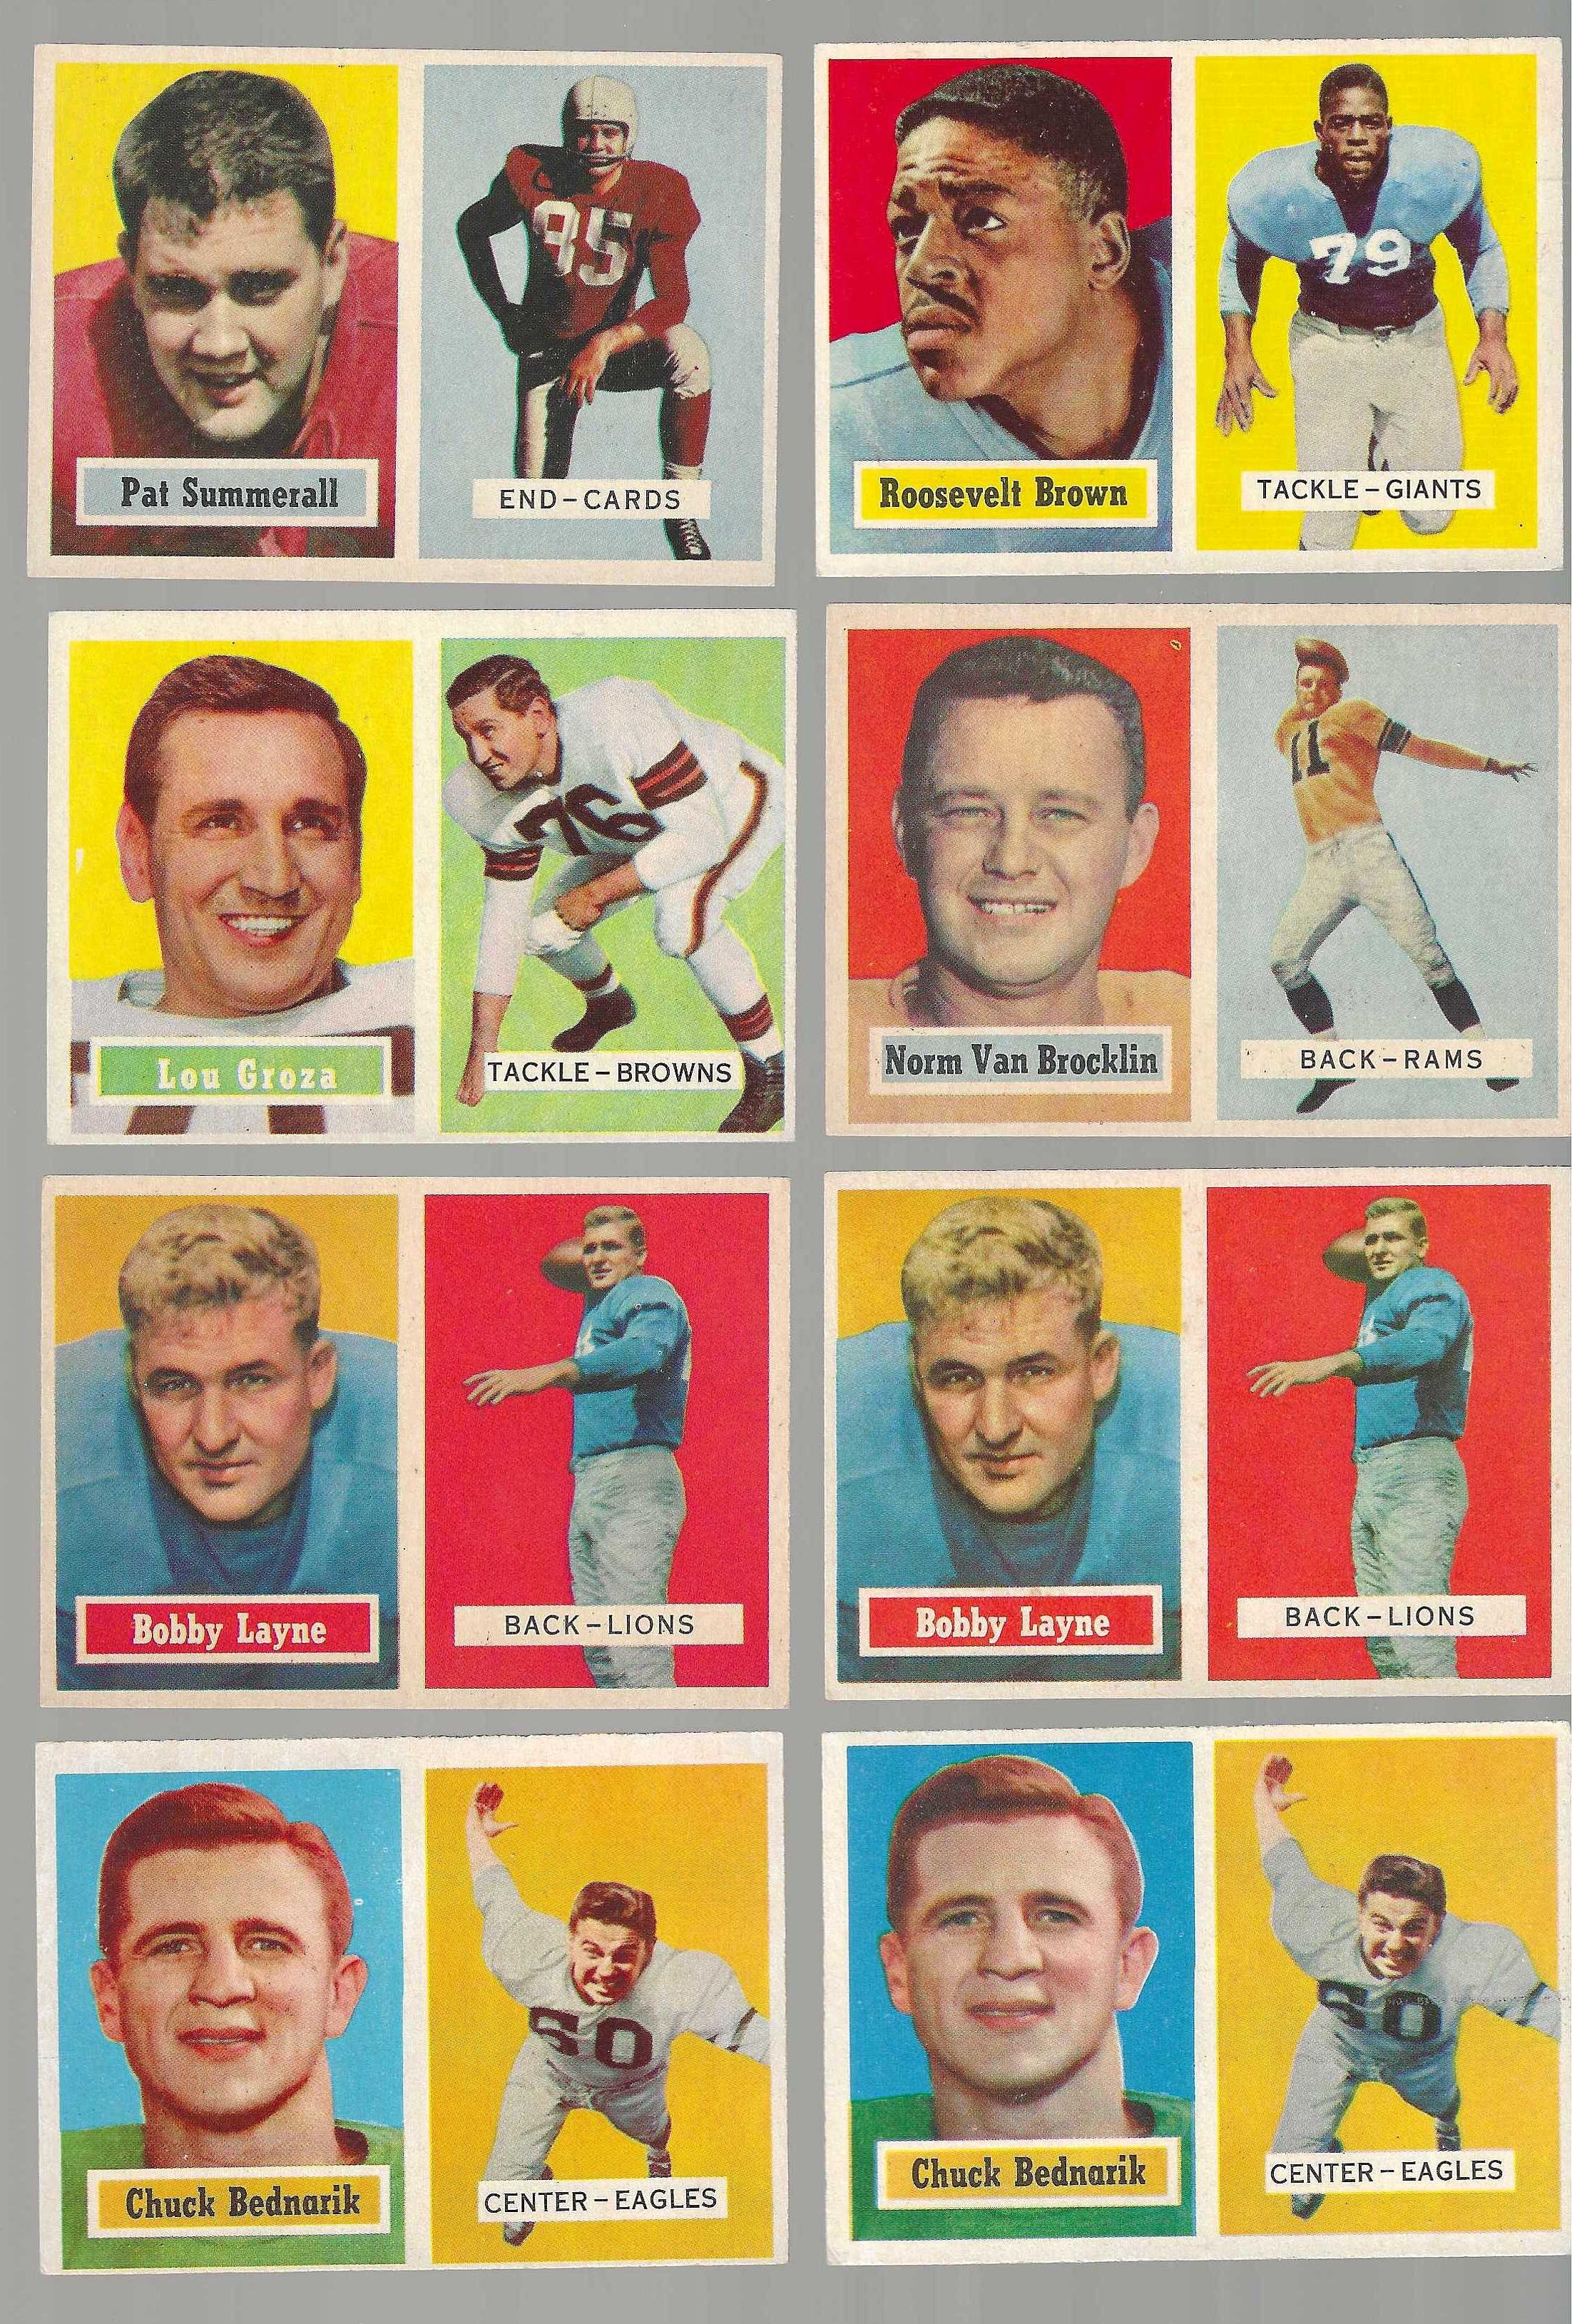 1957 Topps FB #  1 Eddie Lebaron [#] (Redskins) Football cards value